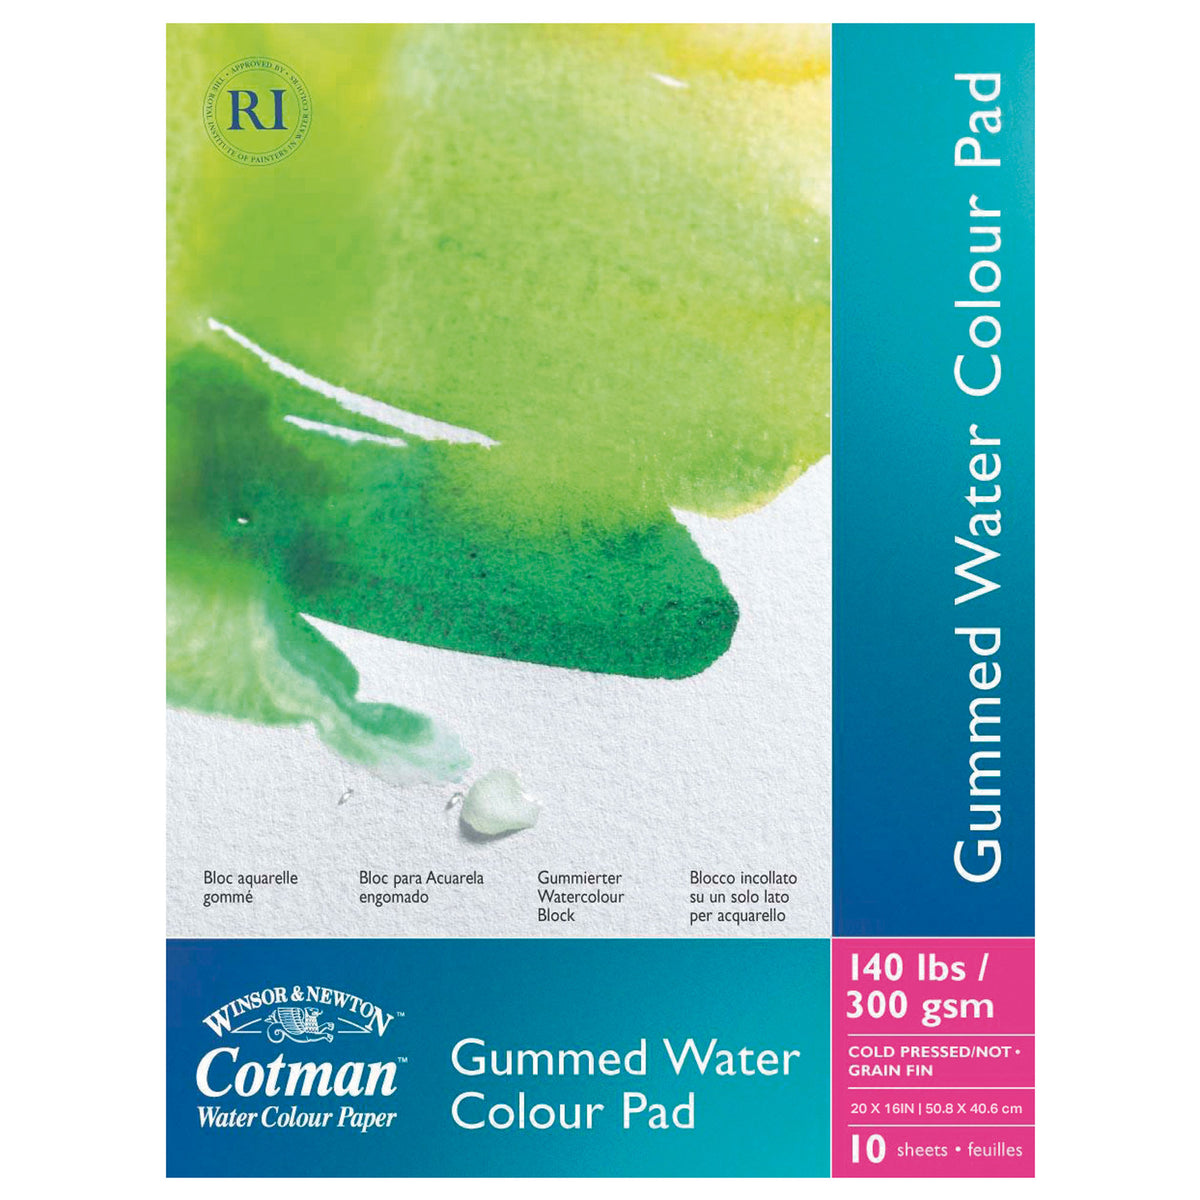 Winsor &amp; Newton Cotman Gummed Watercolour Pad - Cold Pressed - 300gsm/140Ibs - 20&quot; x 16&quot; - 10 Sheets